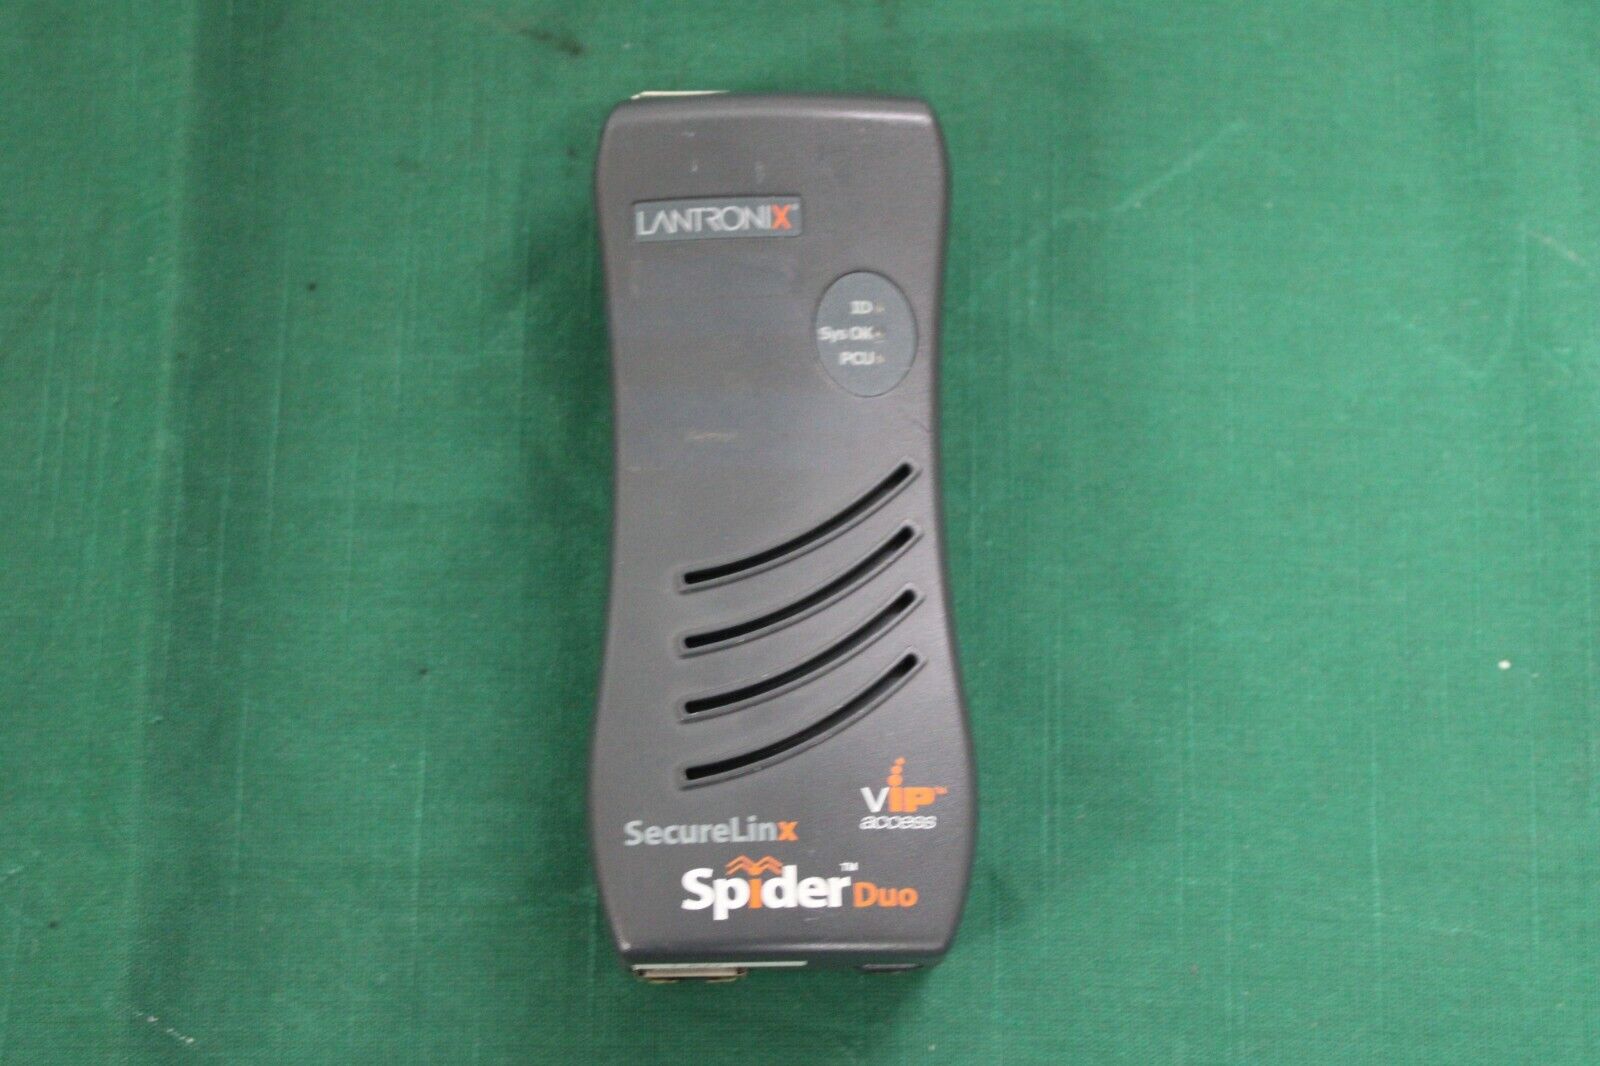 Lantronix Spider Duo SLSLP400USB USB Securelinx